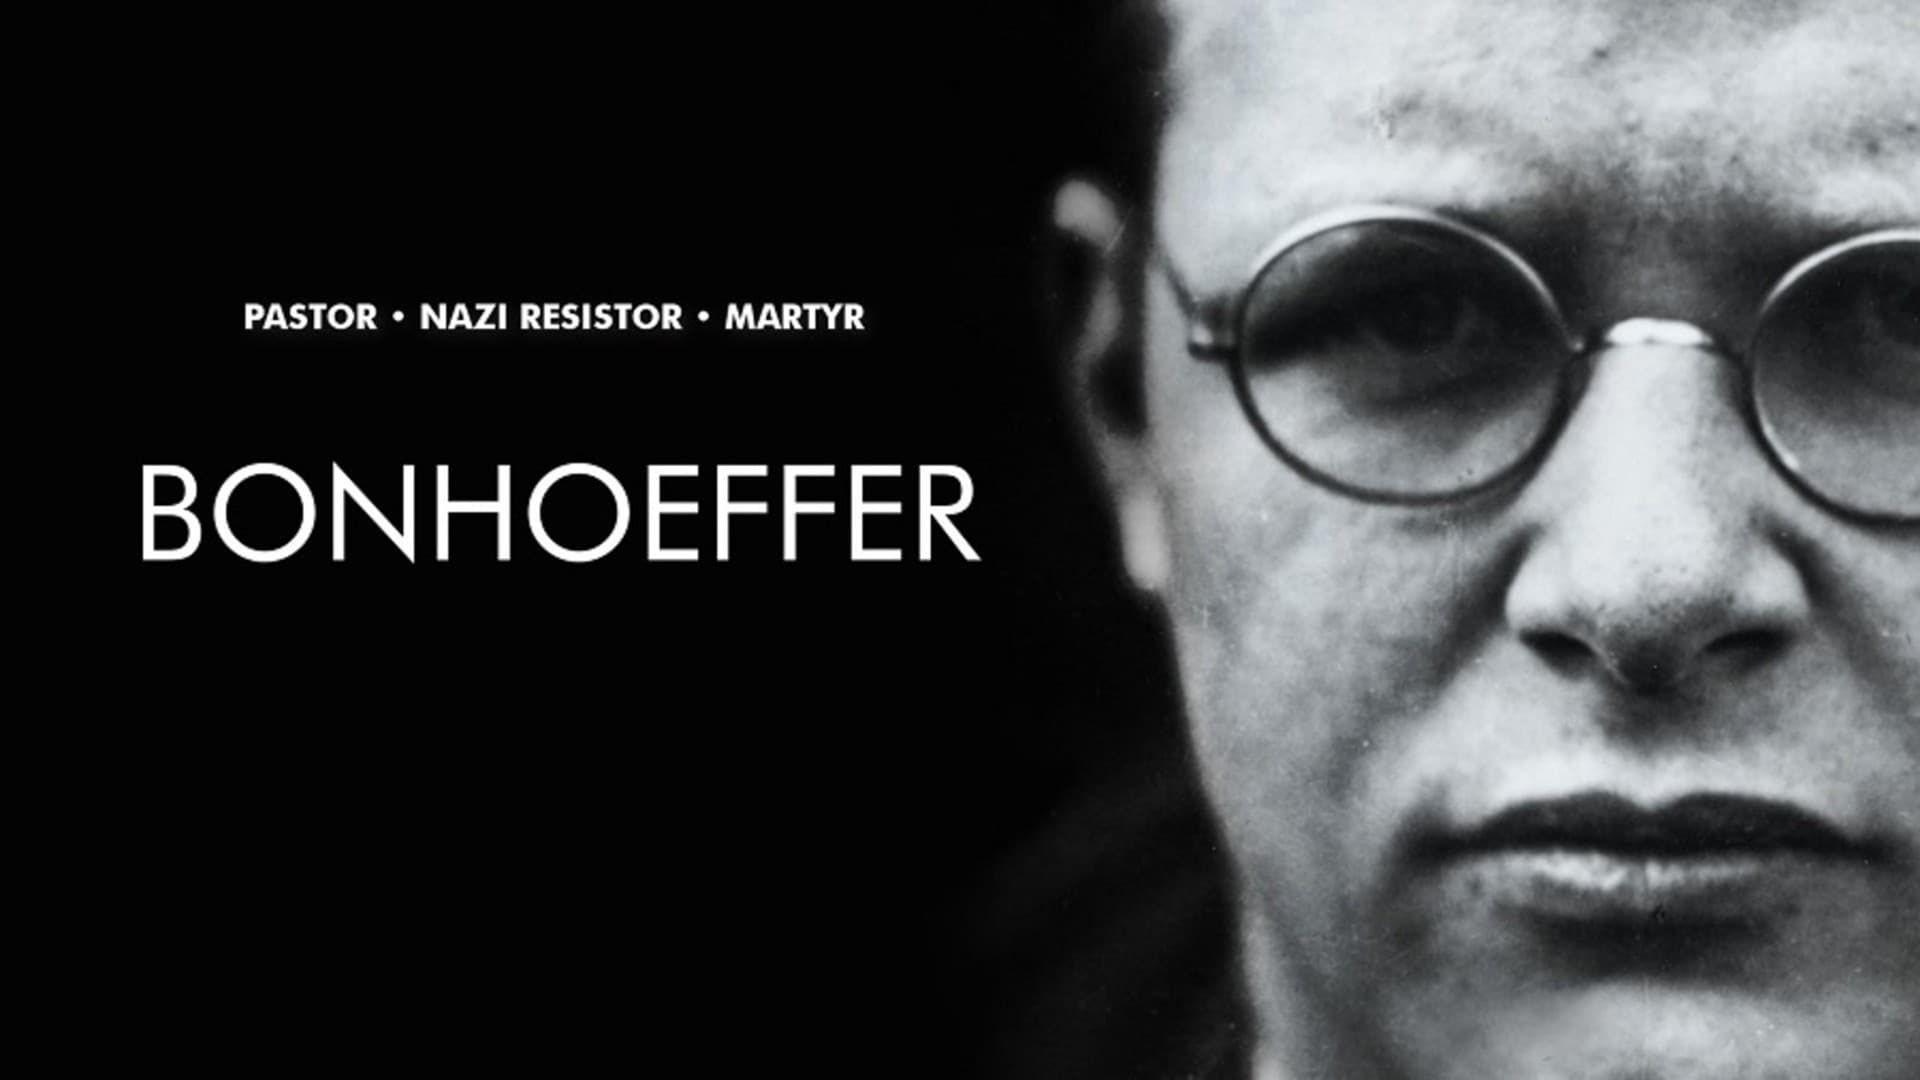 Bonhoeffer background